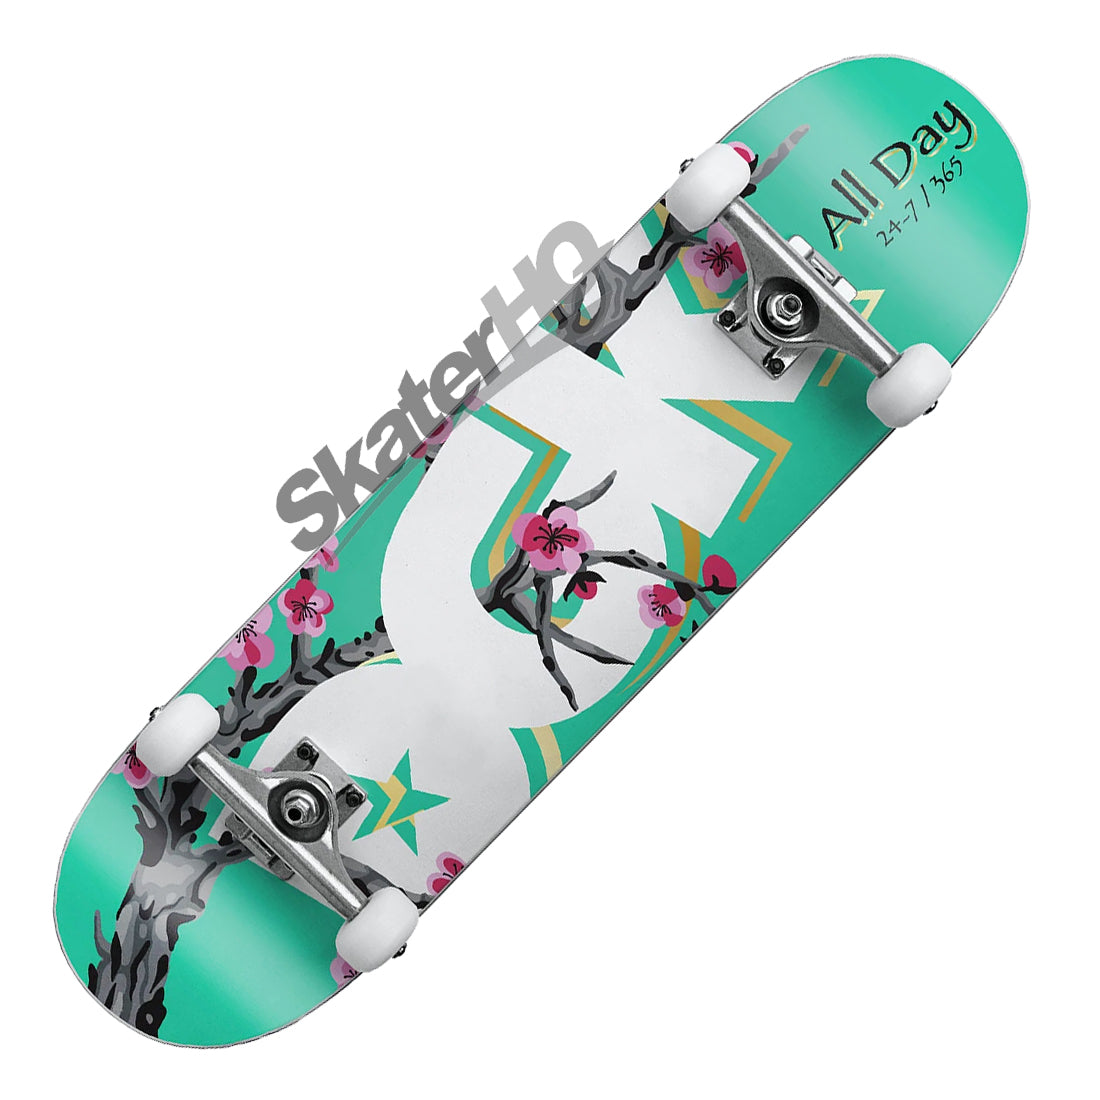 DGK Blossom 7.75 Complete - Turquoise Skateboard Completes Modern Street